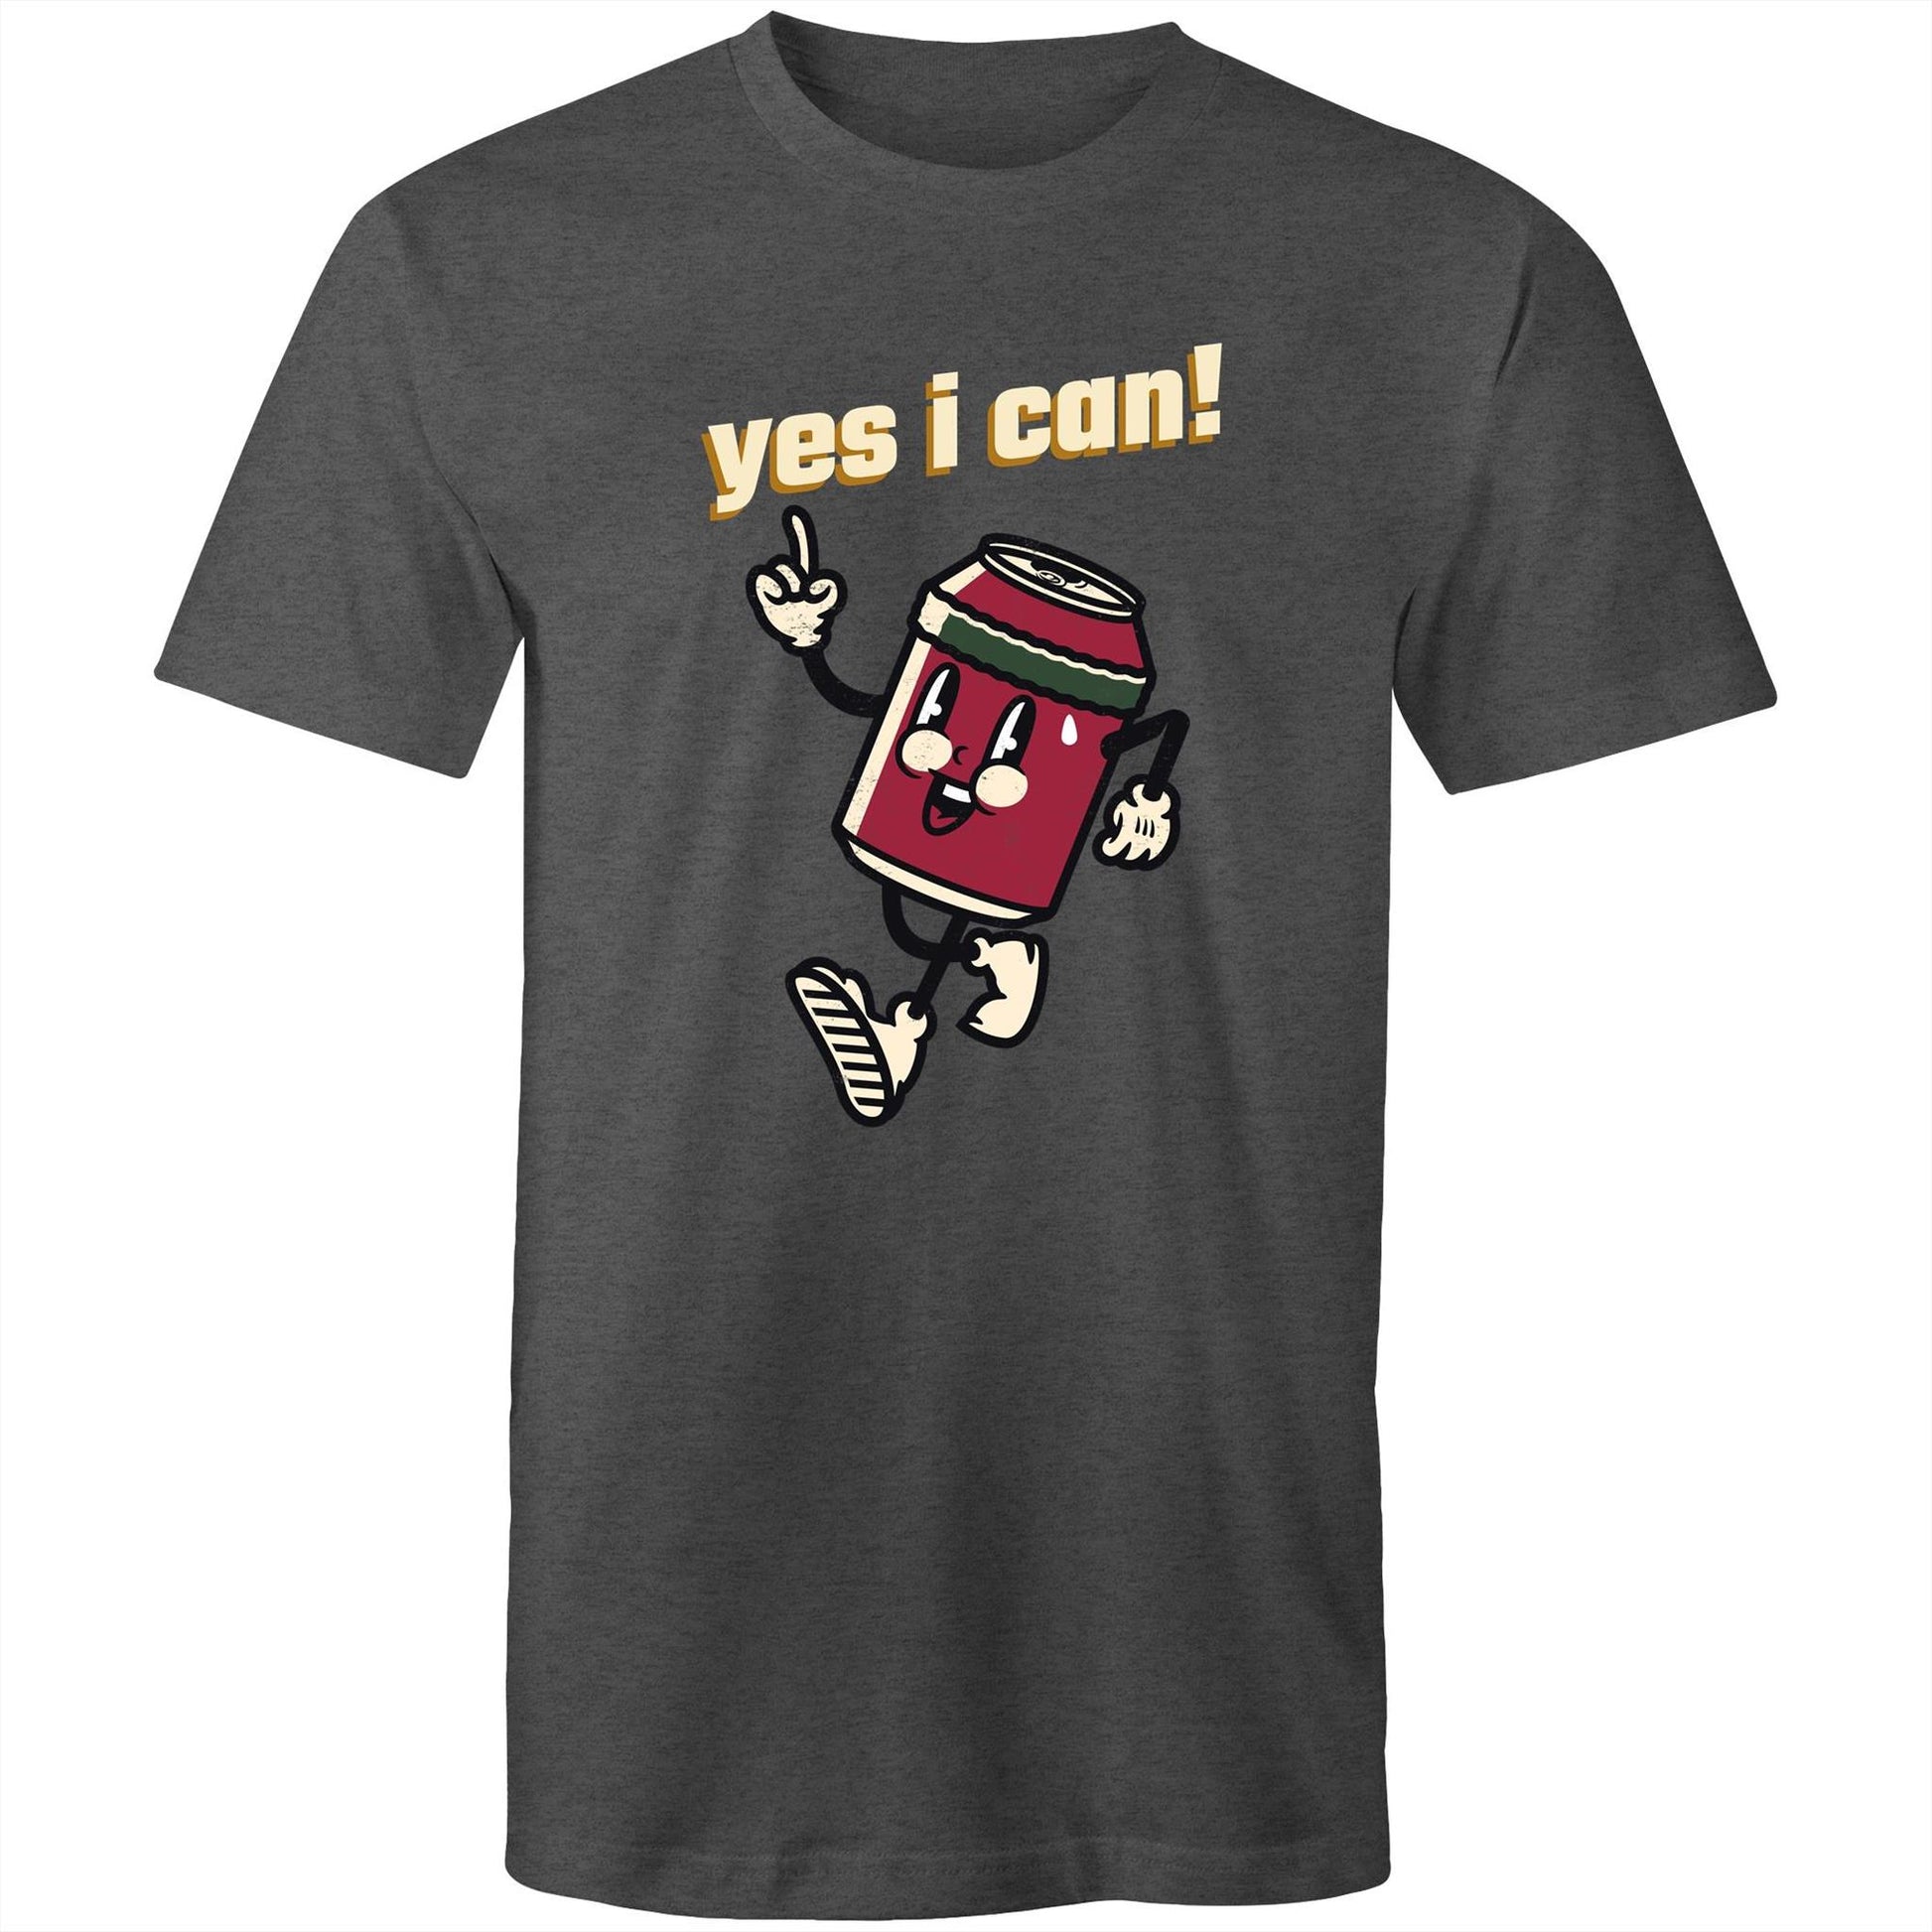 Yes I Can! - Mens T-Shirt Asphalt Marle Mens T-shirt Motivation Retro